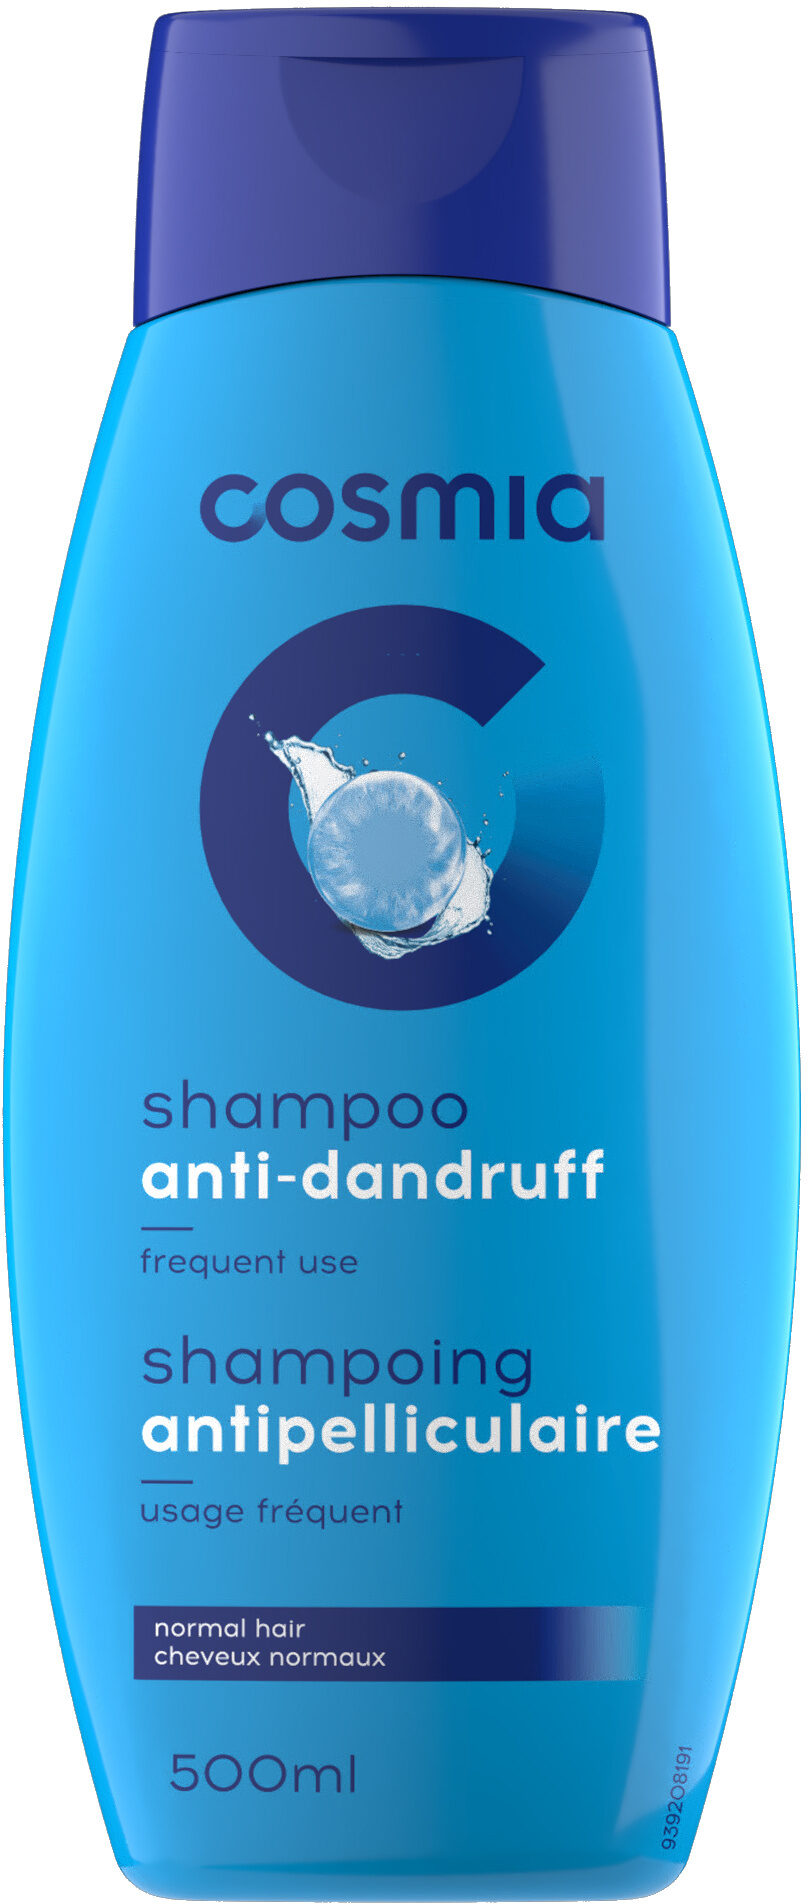 Shampoing antipelliculaire - Produit - fr